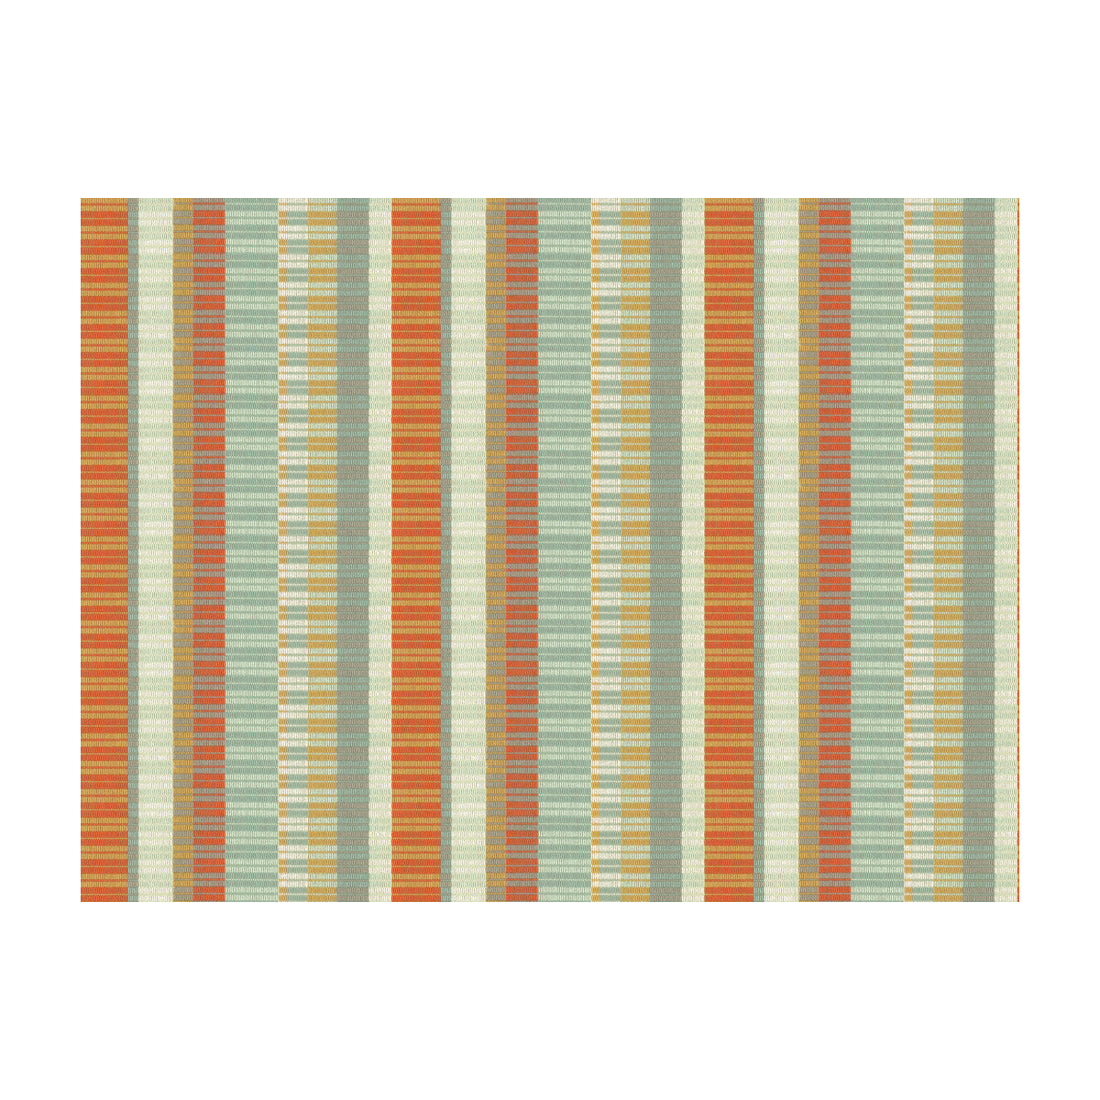 Kravet Design fabric in 33485-1524 color - pattern 33485.1524.0 - by Kravet Design in the Inspirations collection